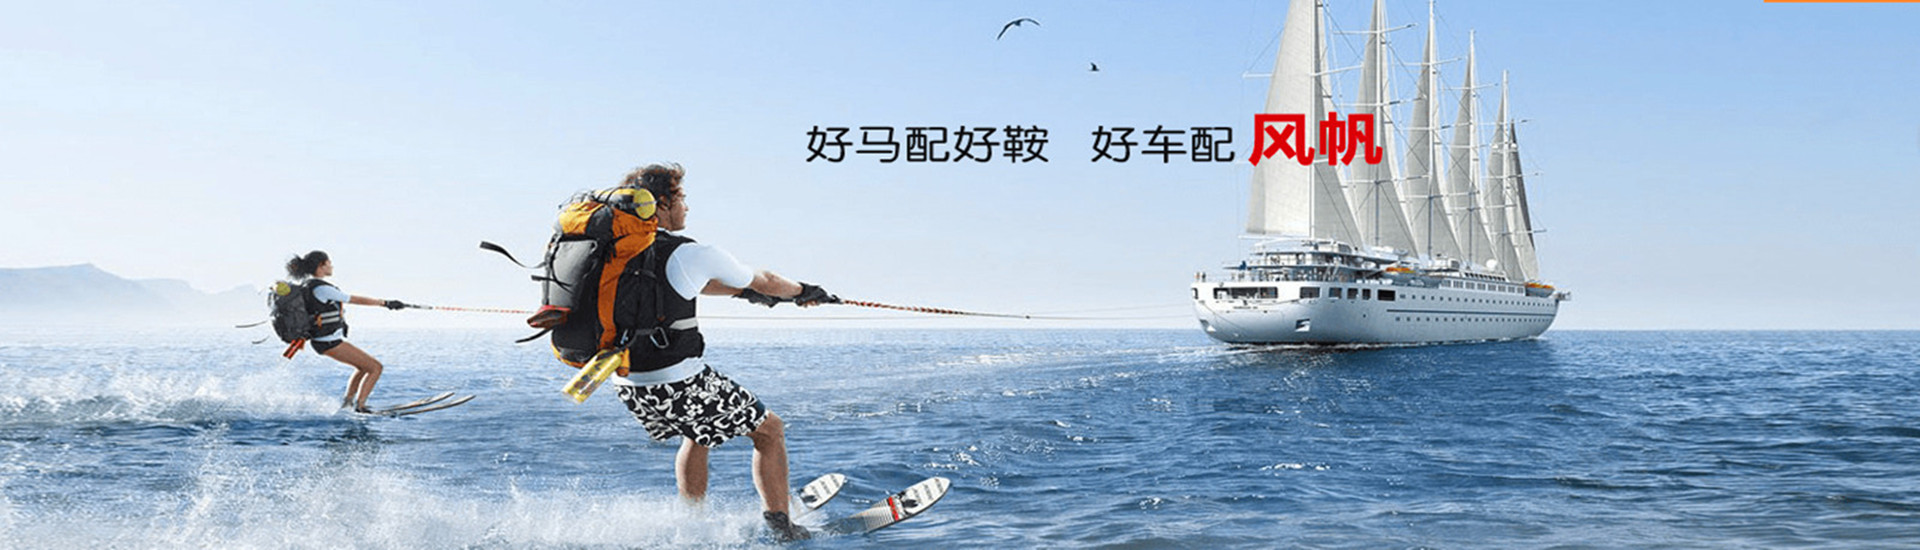 qy千赢国际_风帆电池股份有限公司-官方网站